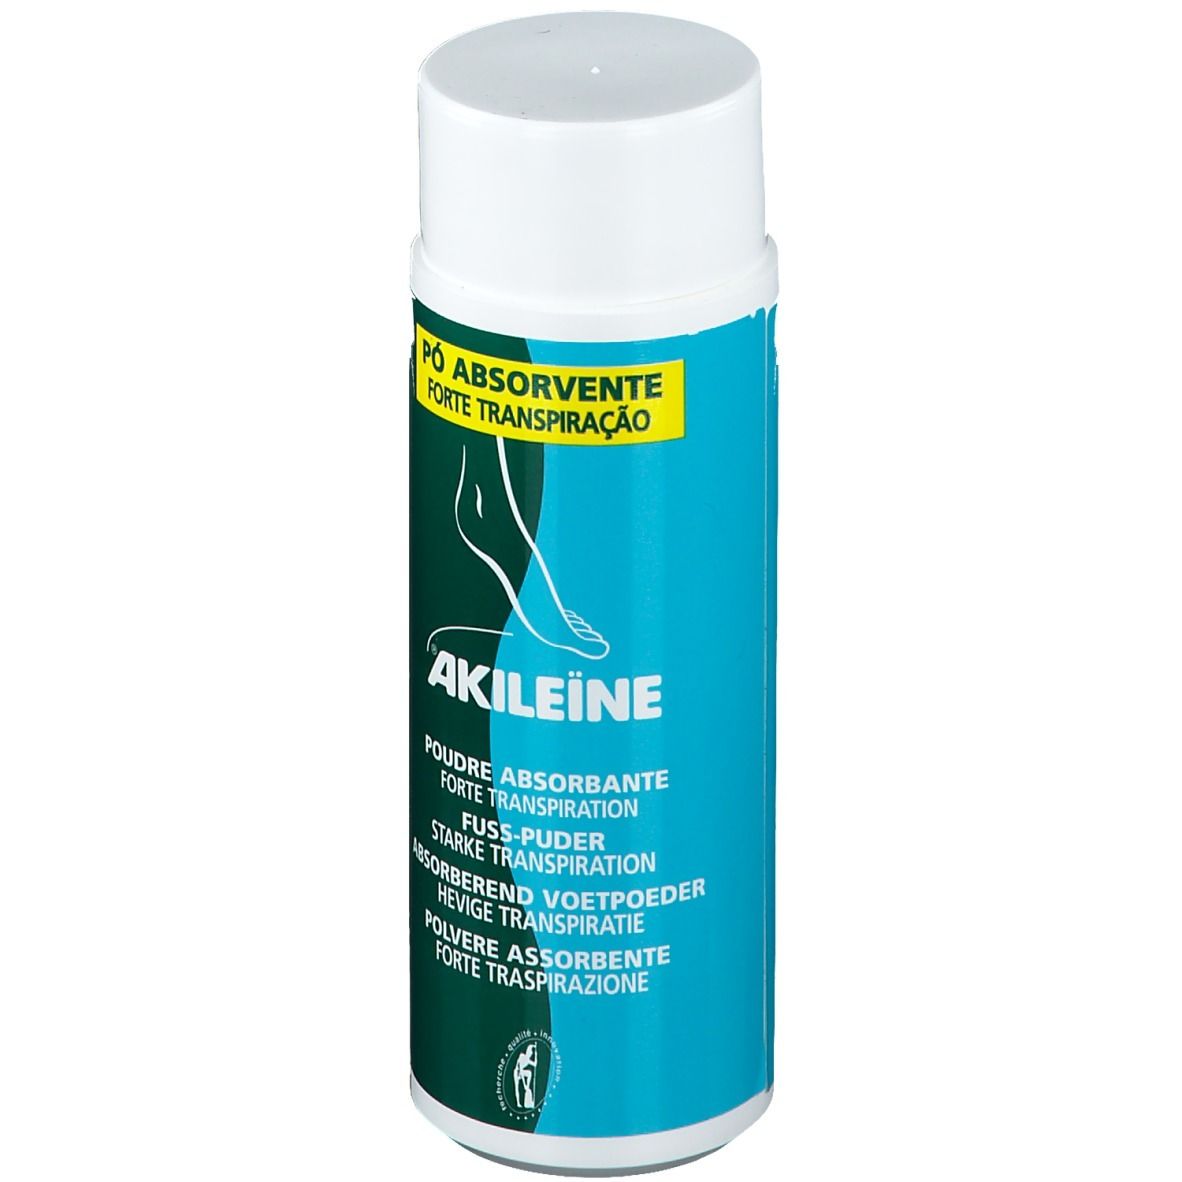 Akileine® Anti-Transpirant Fuß-Puder